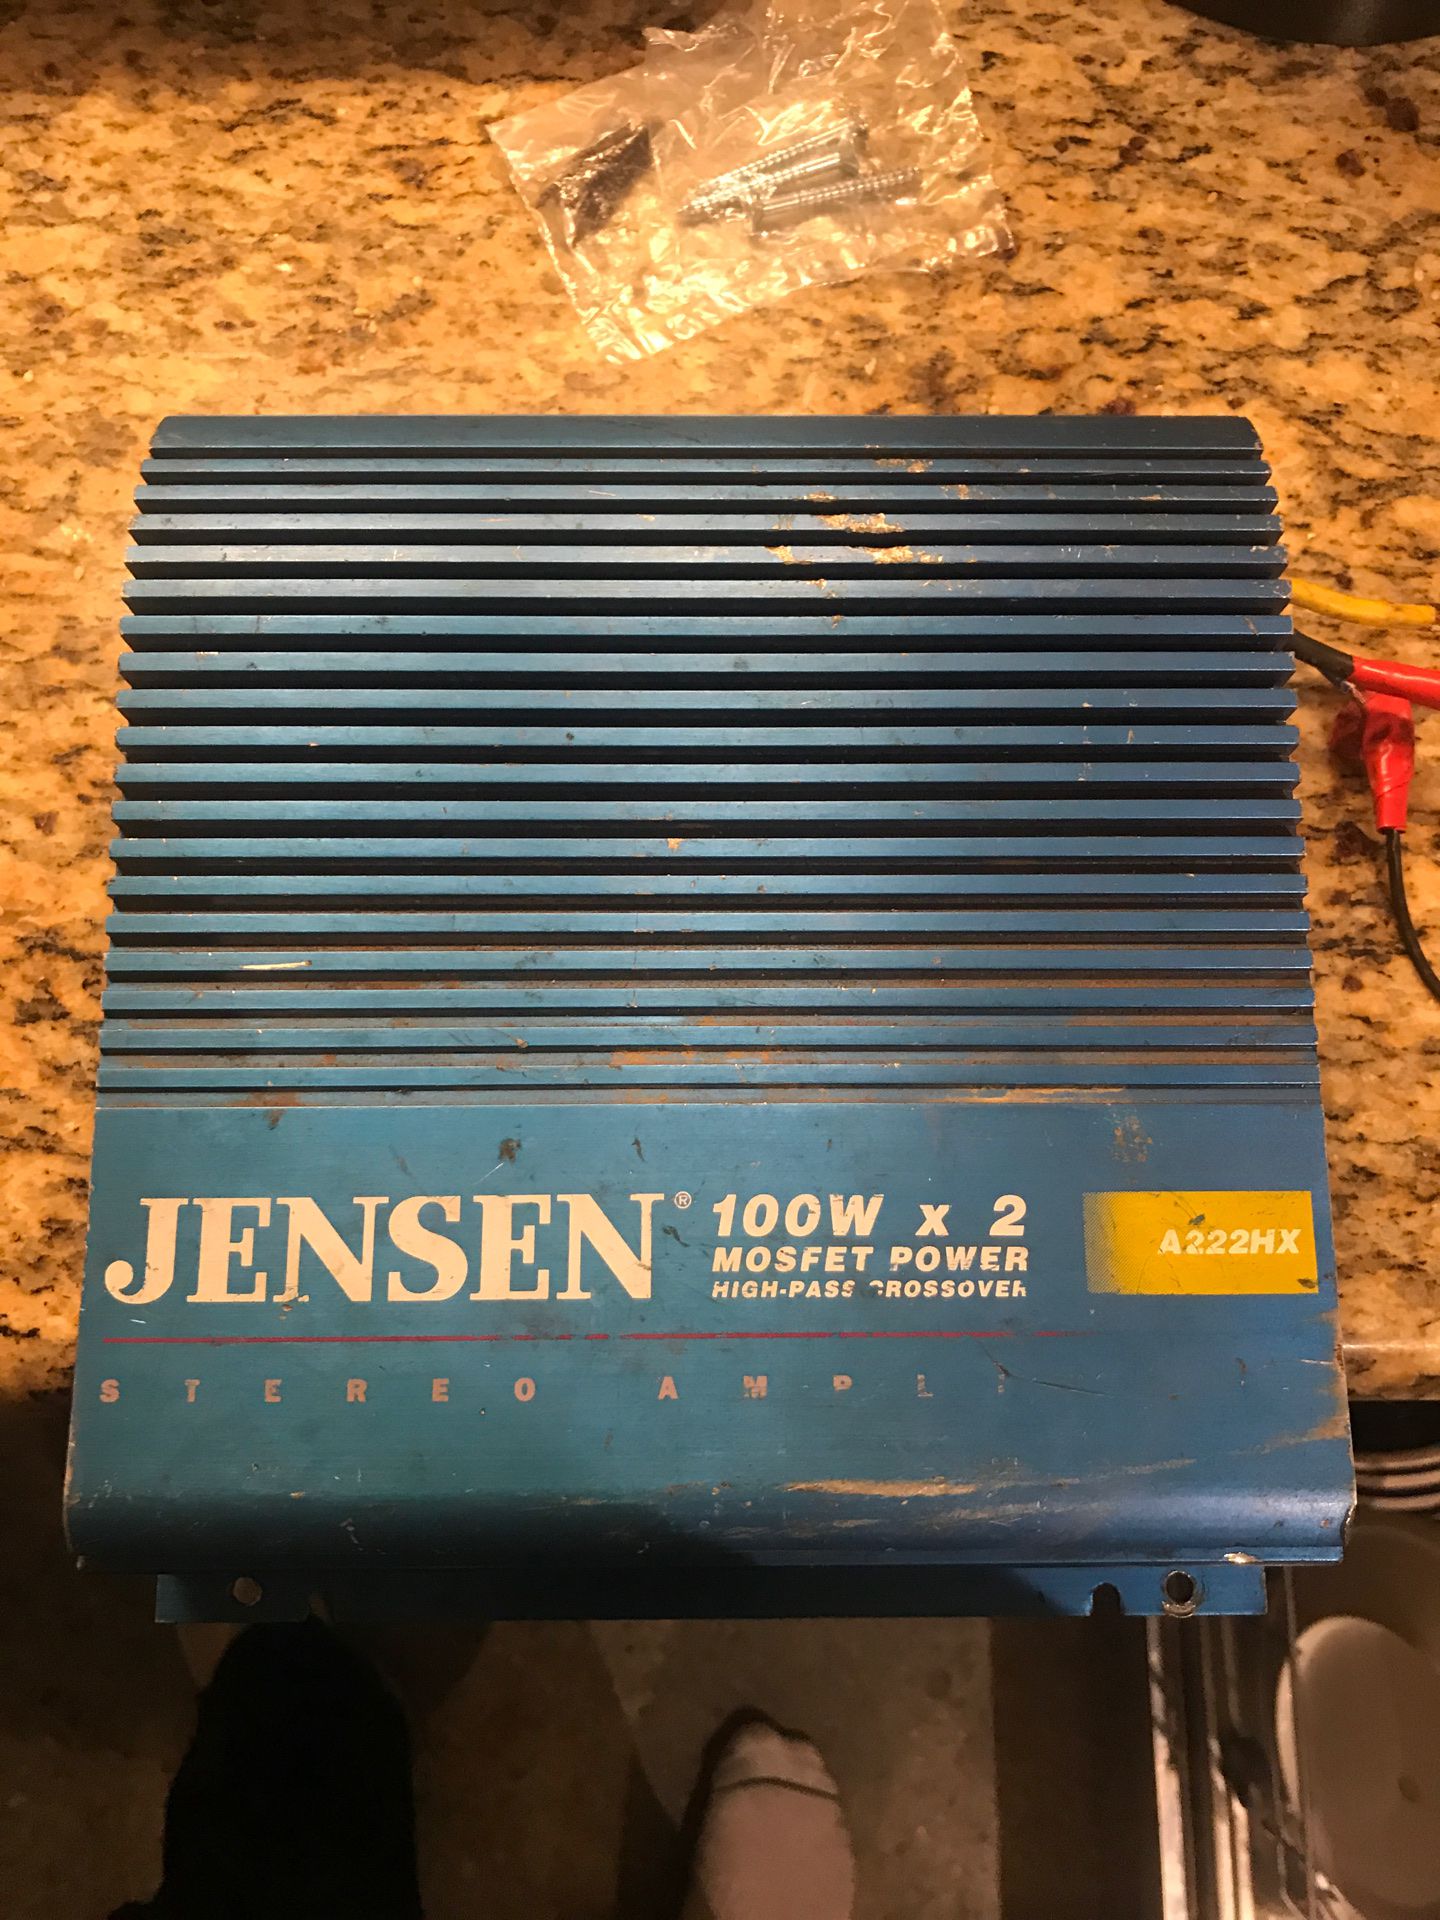 Jensen 100w x 2 Stereo Amp A222HX